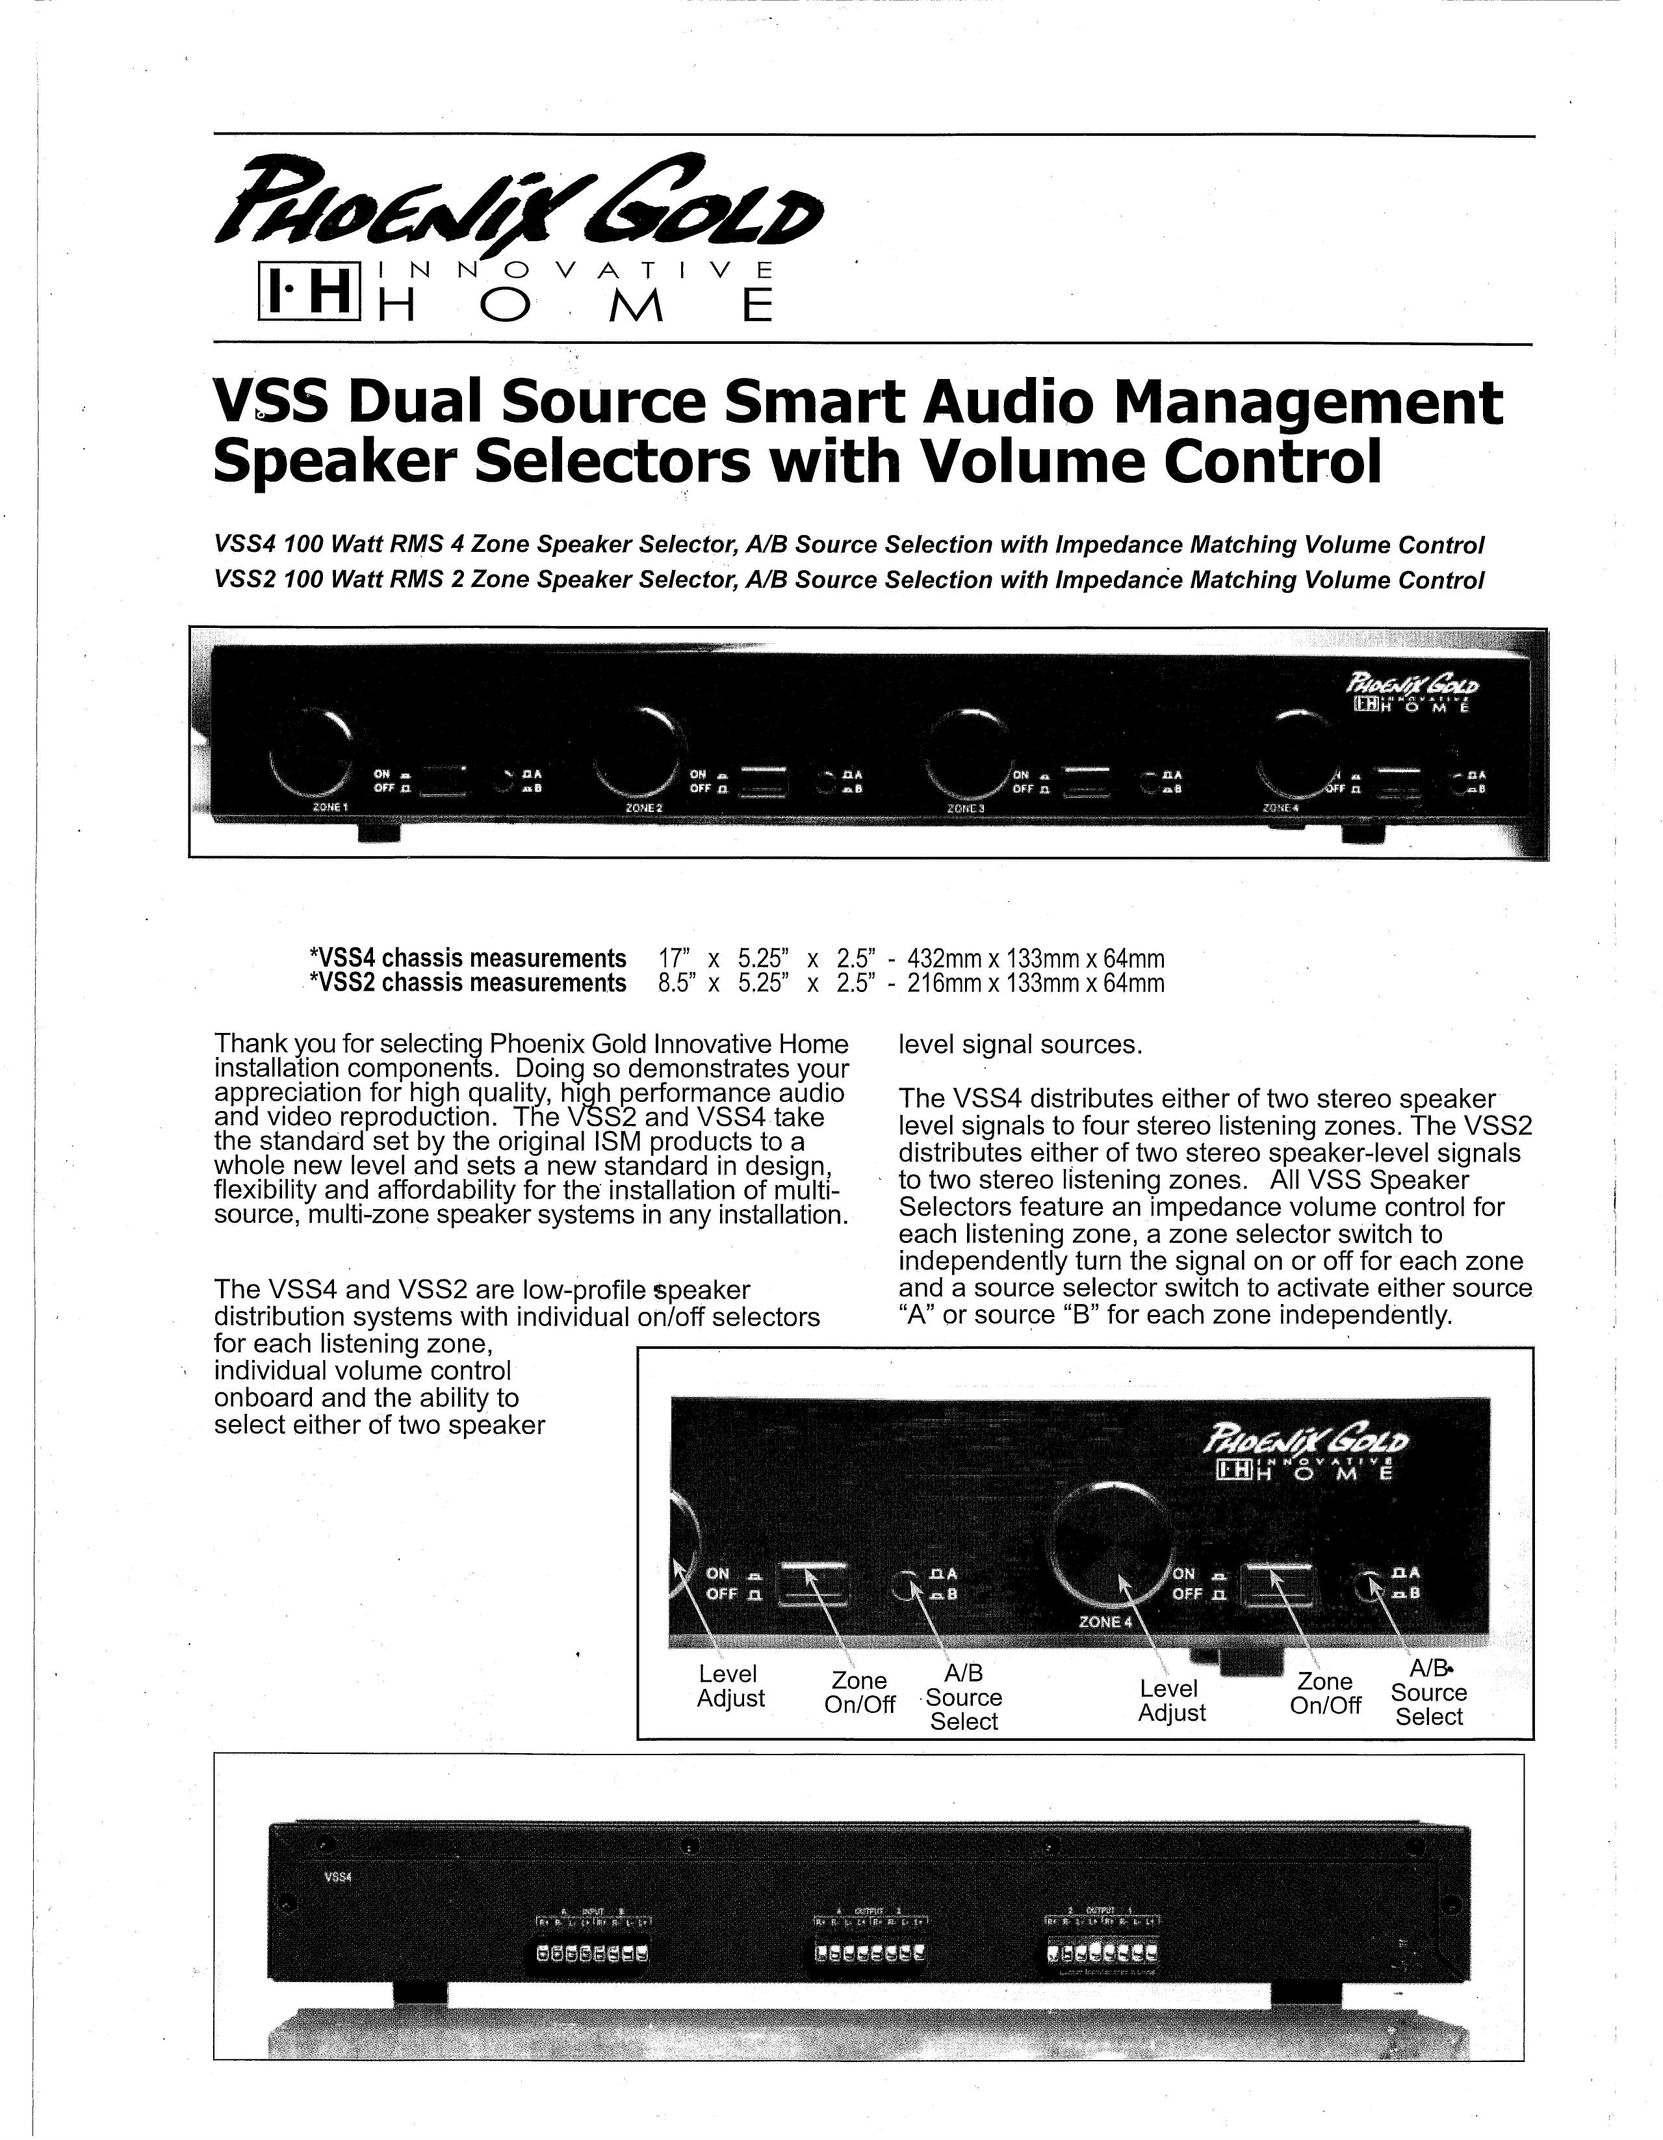 Phoenix Gold VSS4 Speaker System User Manual